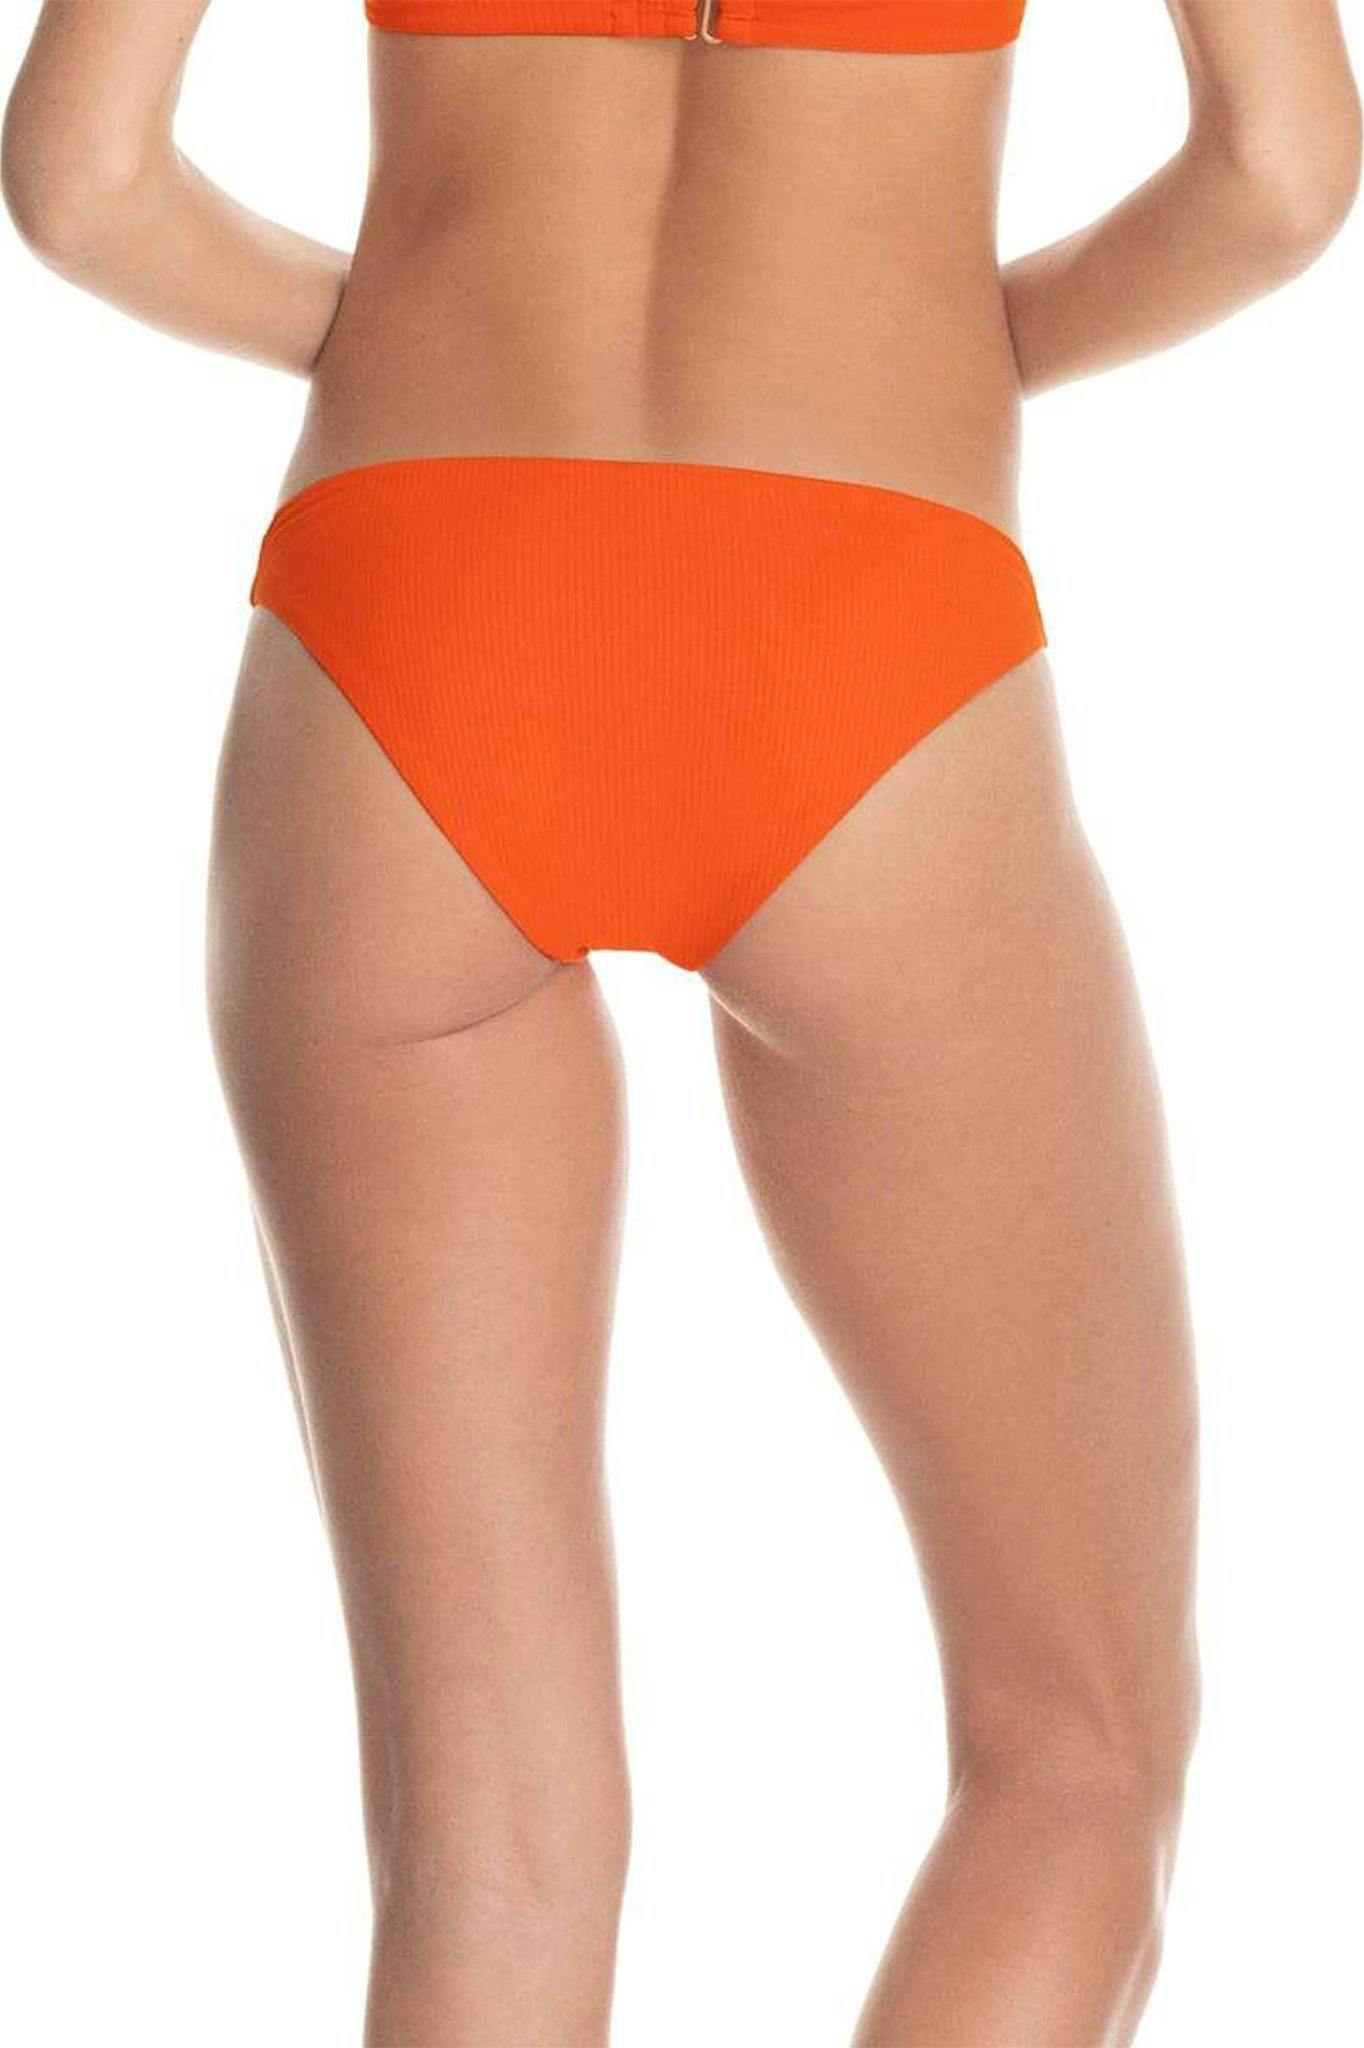 Product gallery image number 2 for product Ginger Orange Flirt Thin Side Cheeky Cut Bikini Bottom - Women's